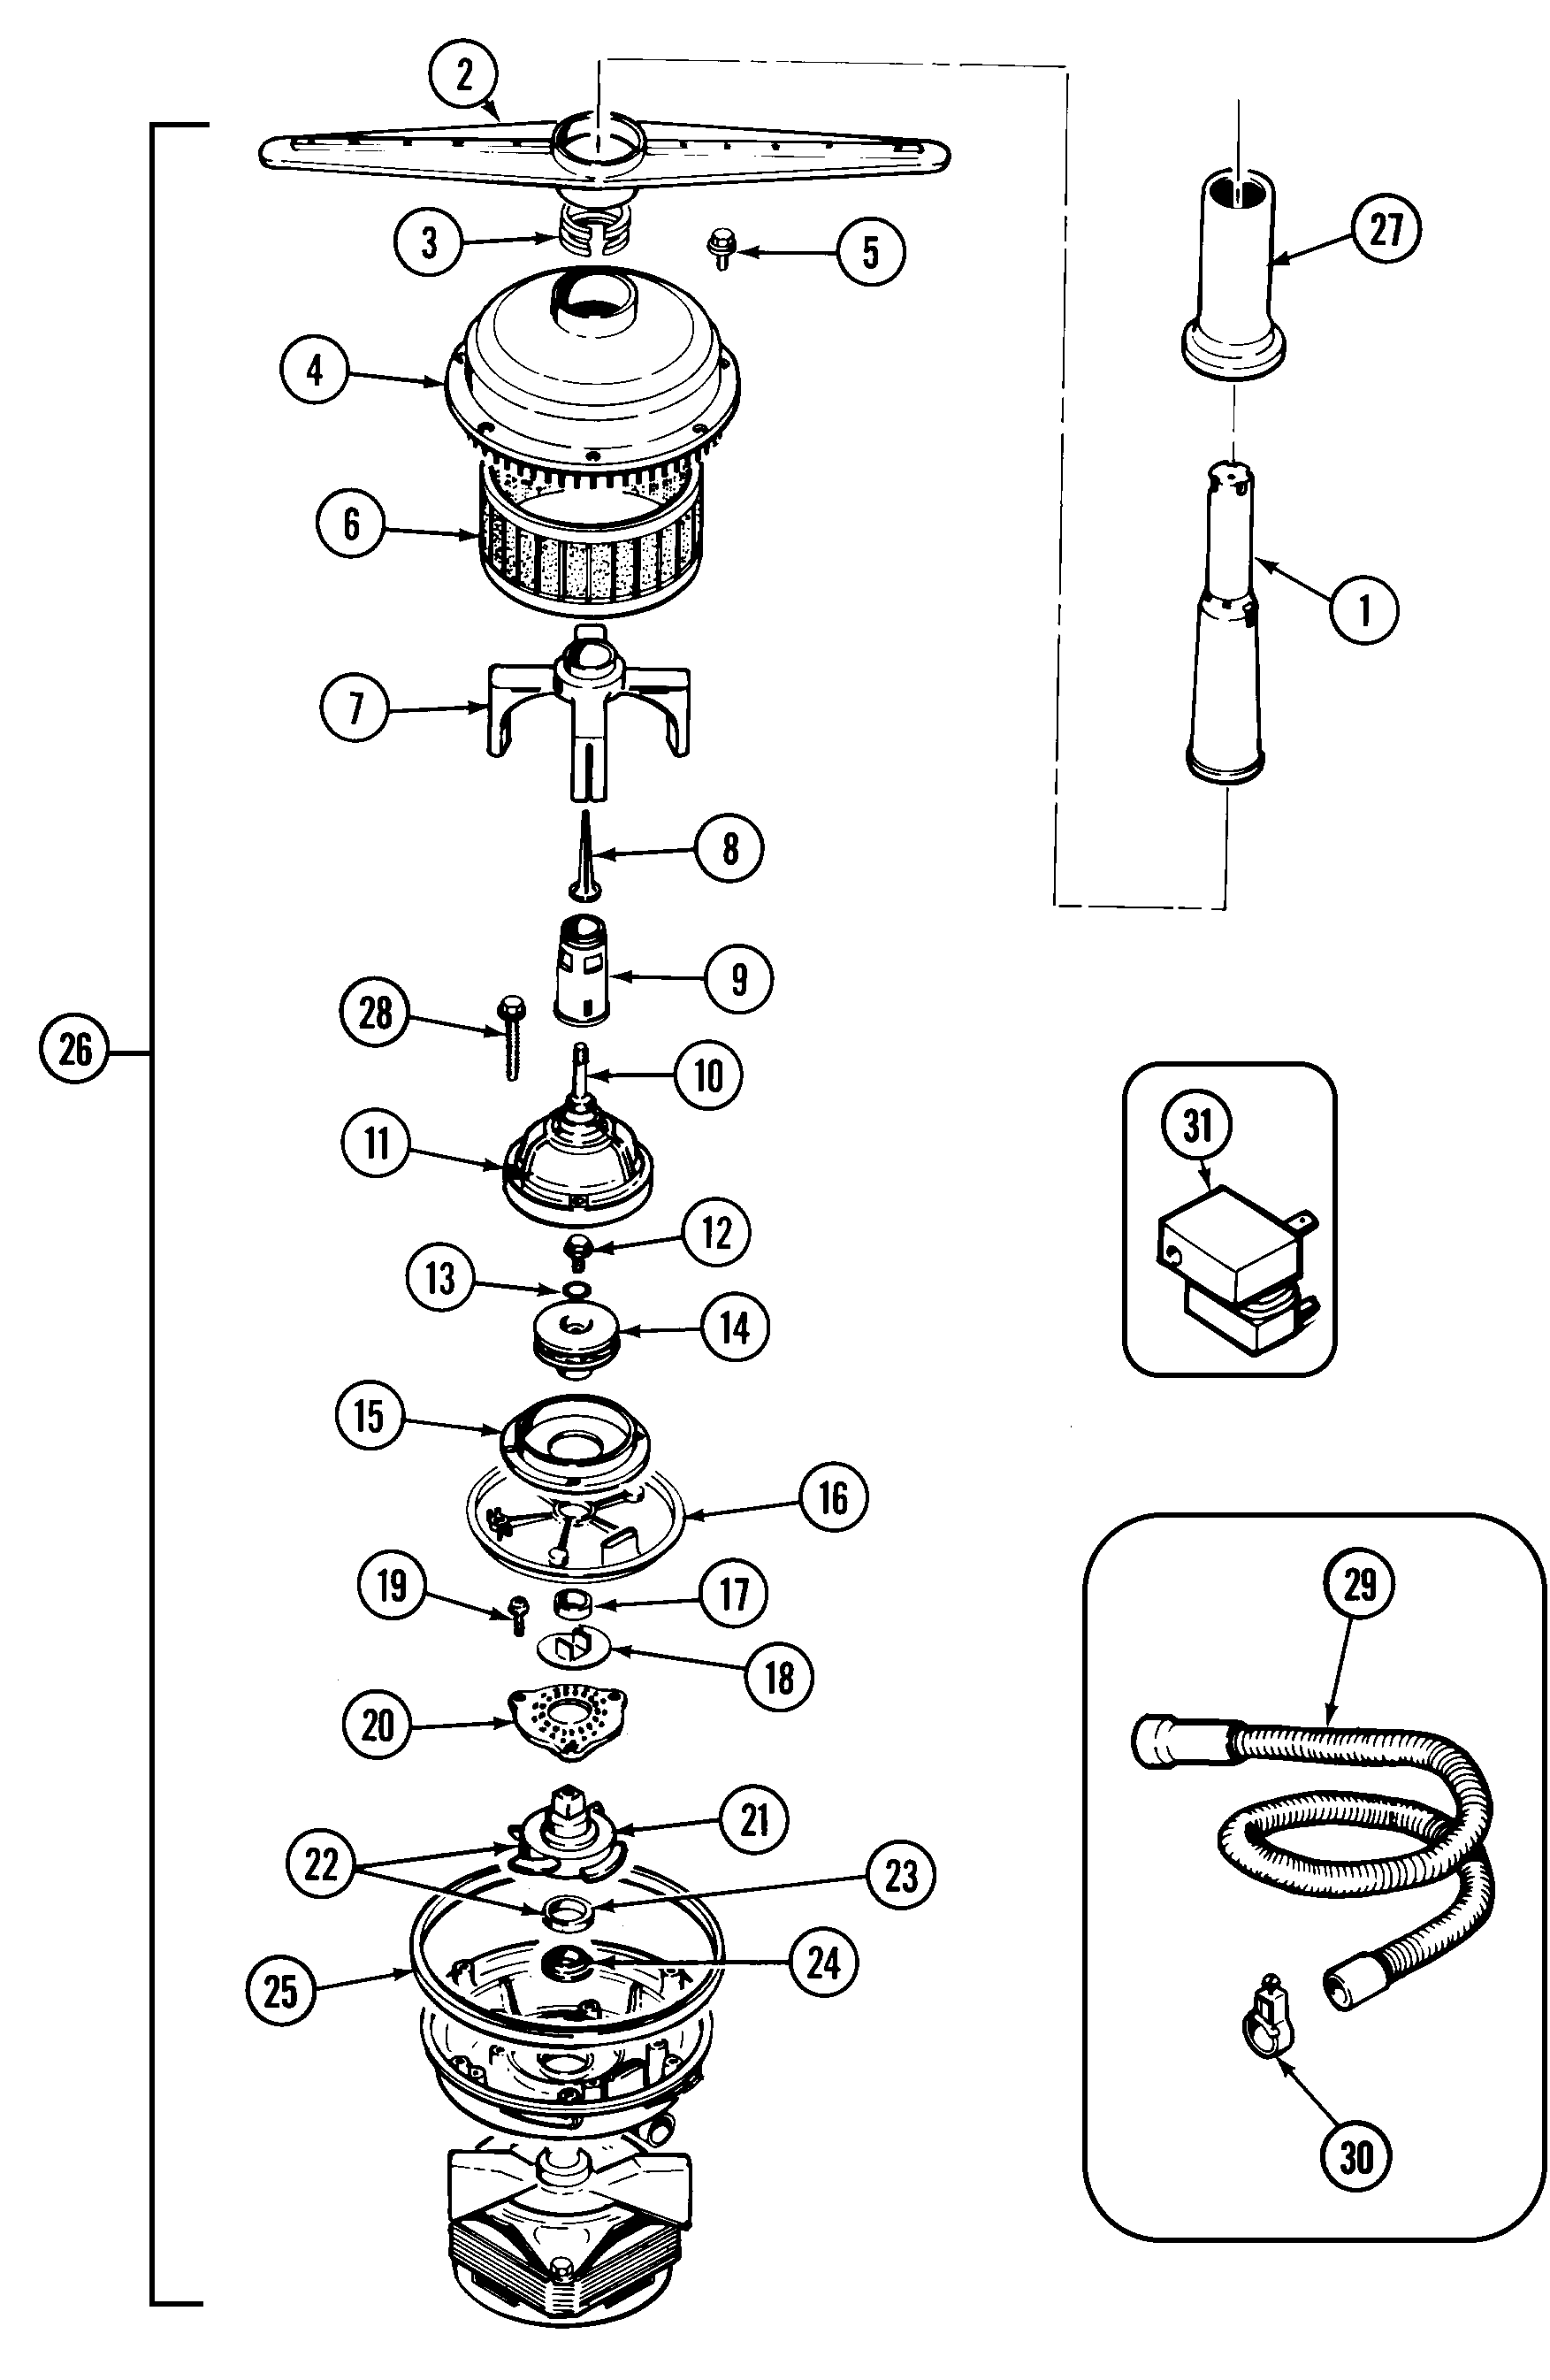 Maytag Dishwasher Wiring Diagram from c.searspartsdirect.com